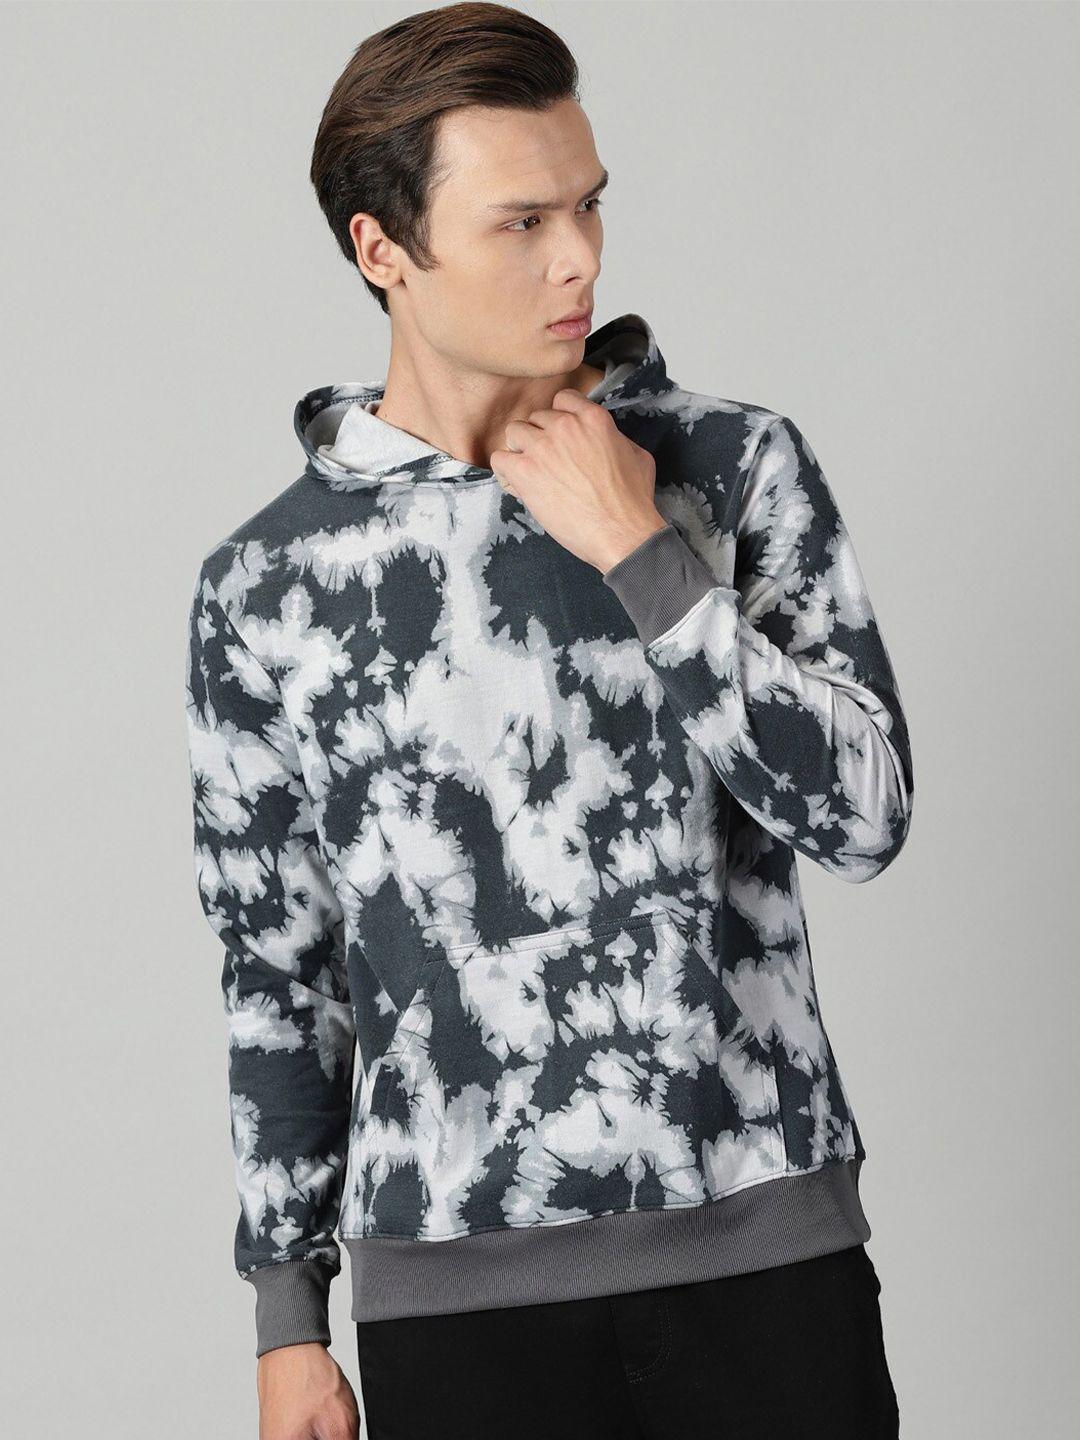 rodzen abstract printed hooded cotton pullover sweatshirt